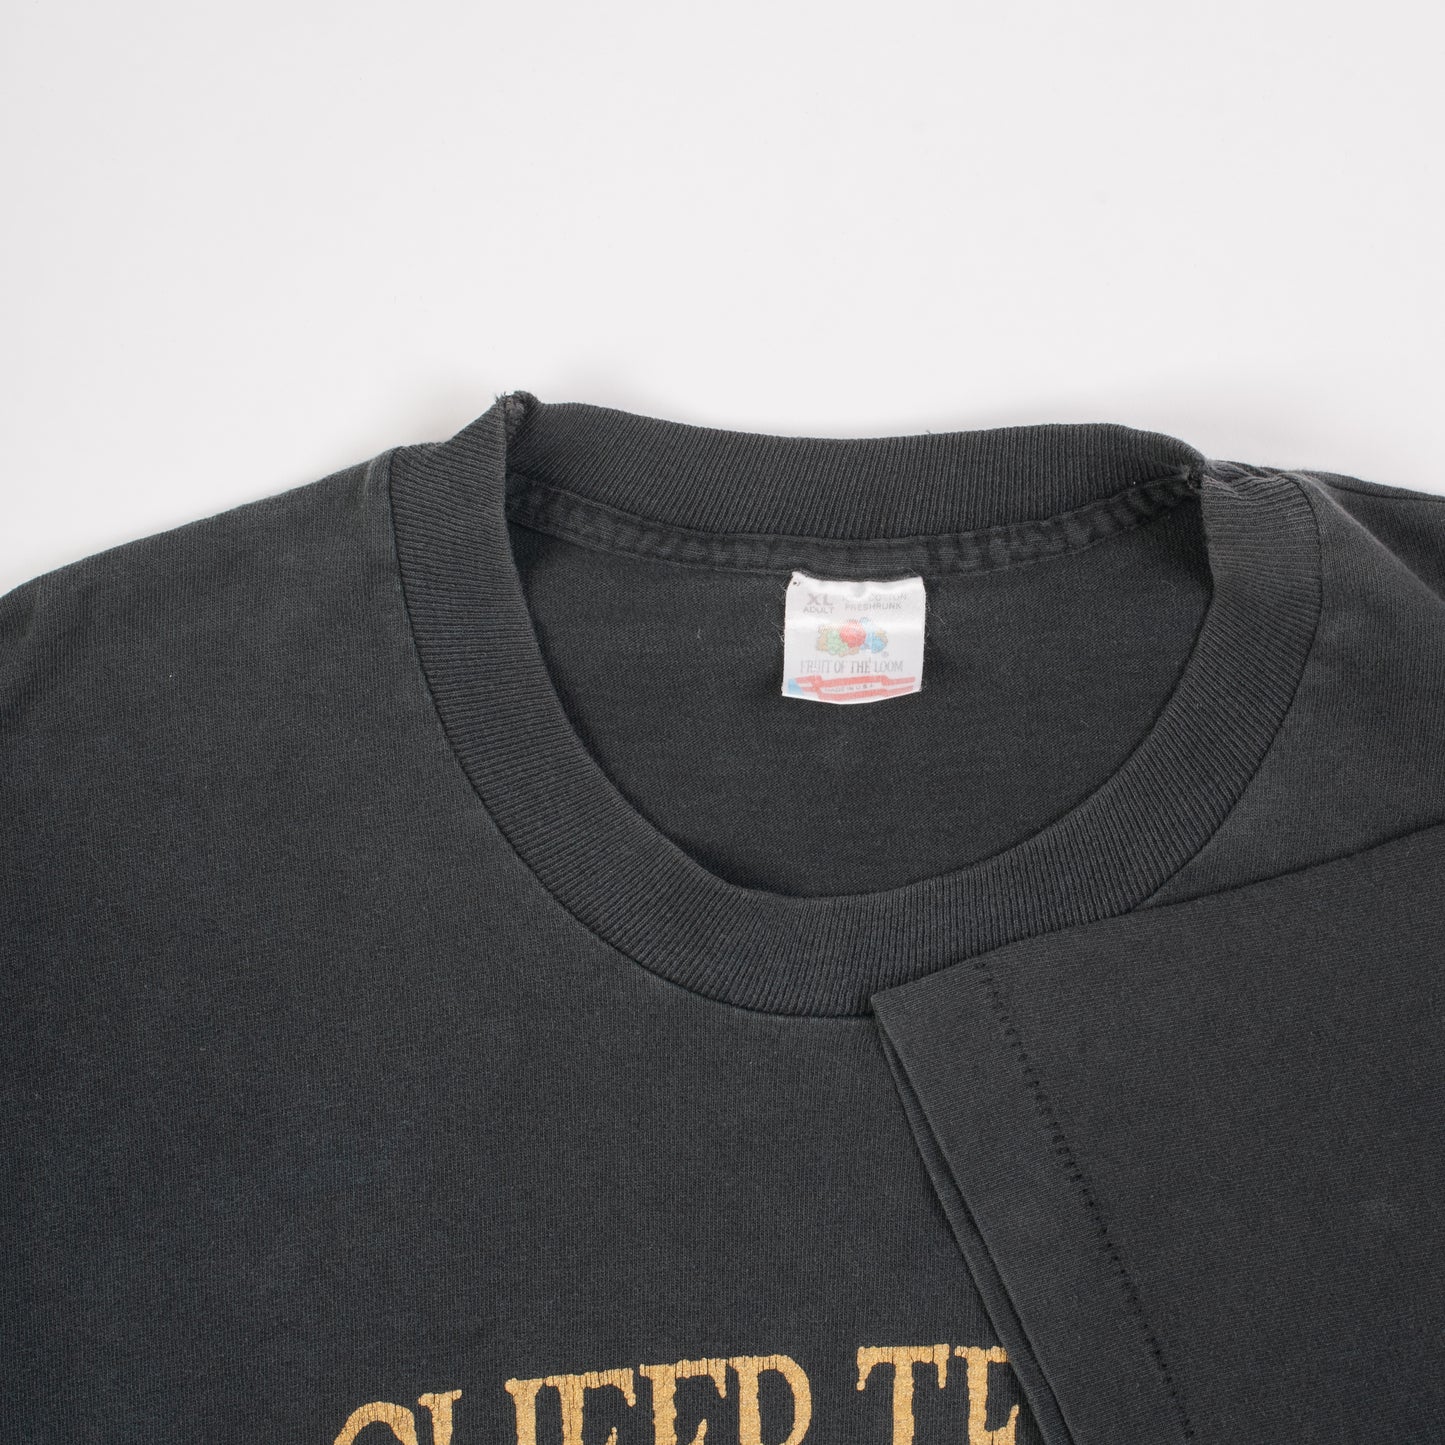 Vintage 90’s Sheer Terror T-Shirt